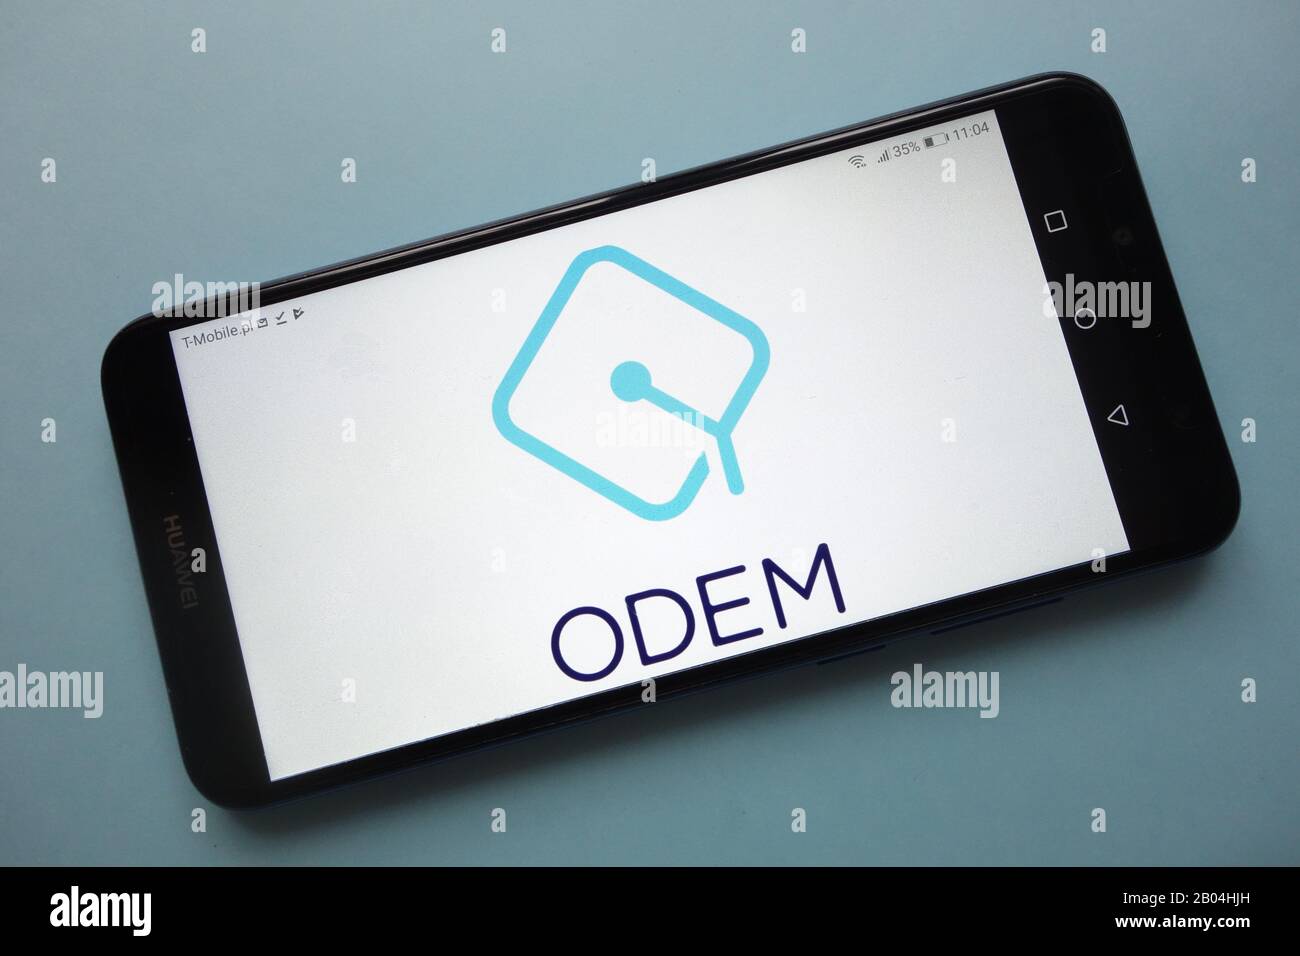 ODEM (ODE) cryptocurrency logo displayed on smartphone Stock Photo